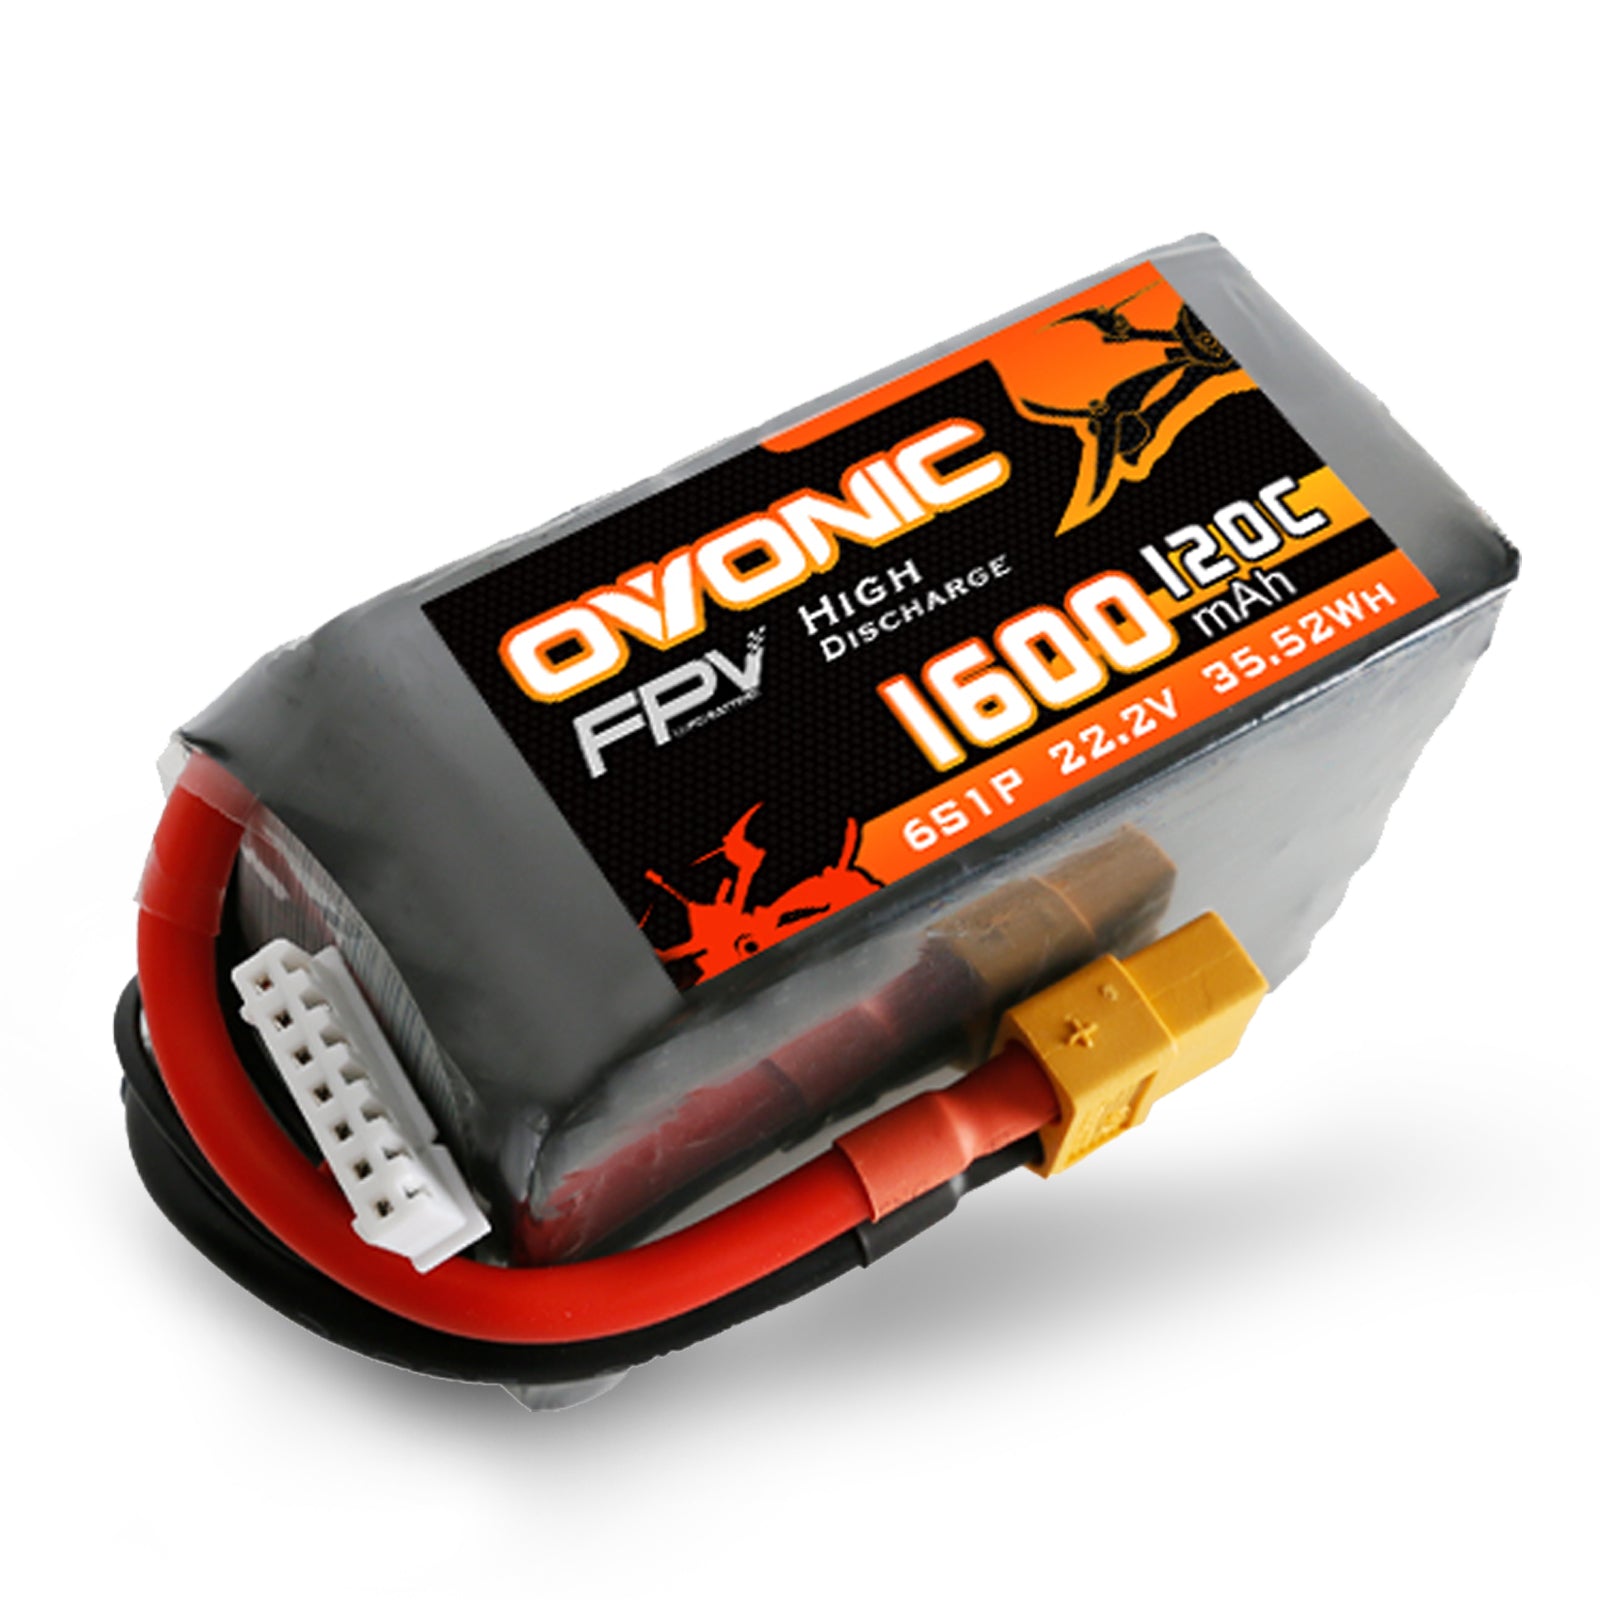 4×Ovonic 120C 6S 1600mAh LiPo Battery 22.2V for FPV Racing with XT60 Plug